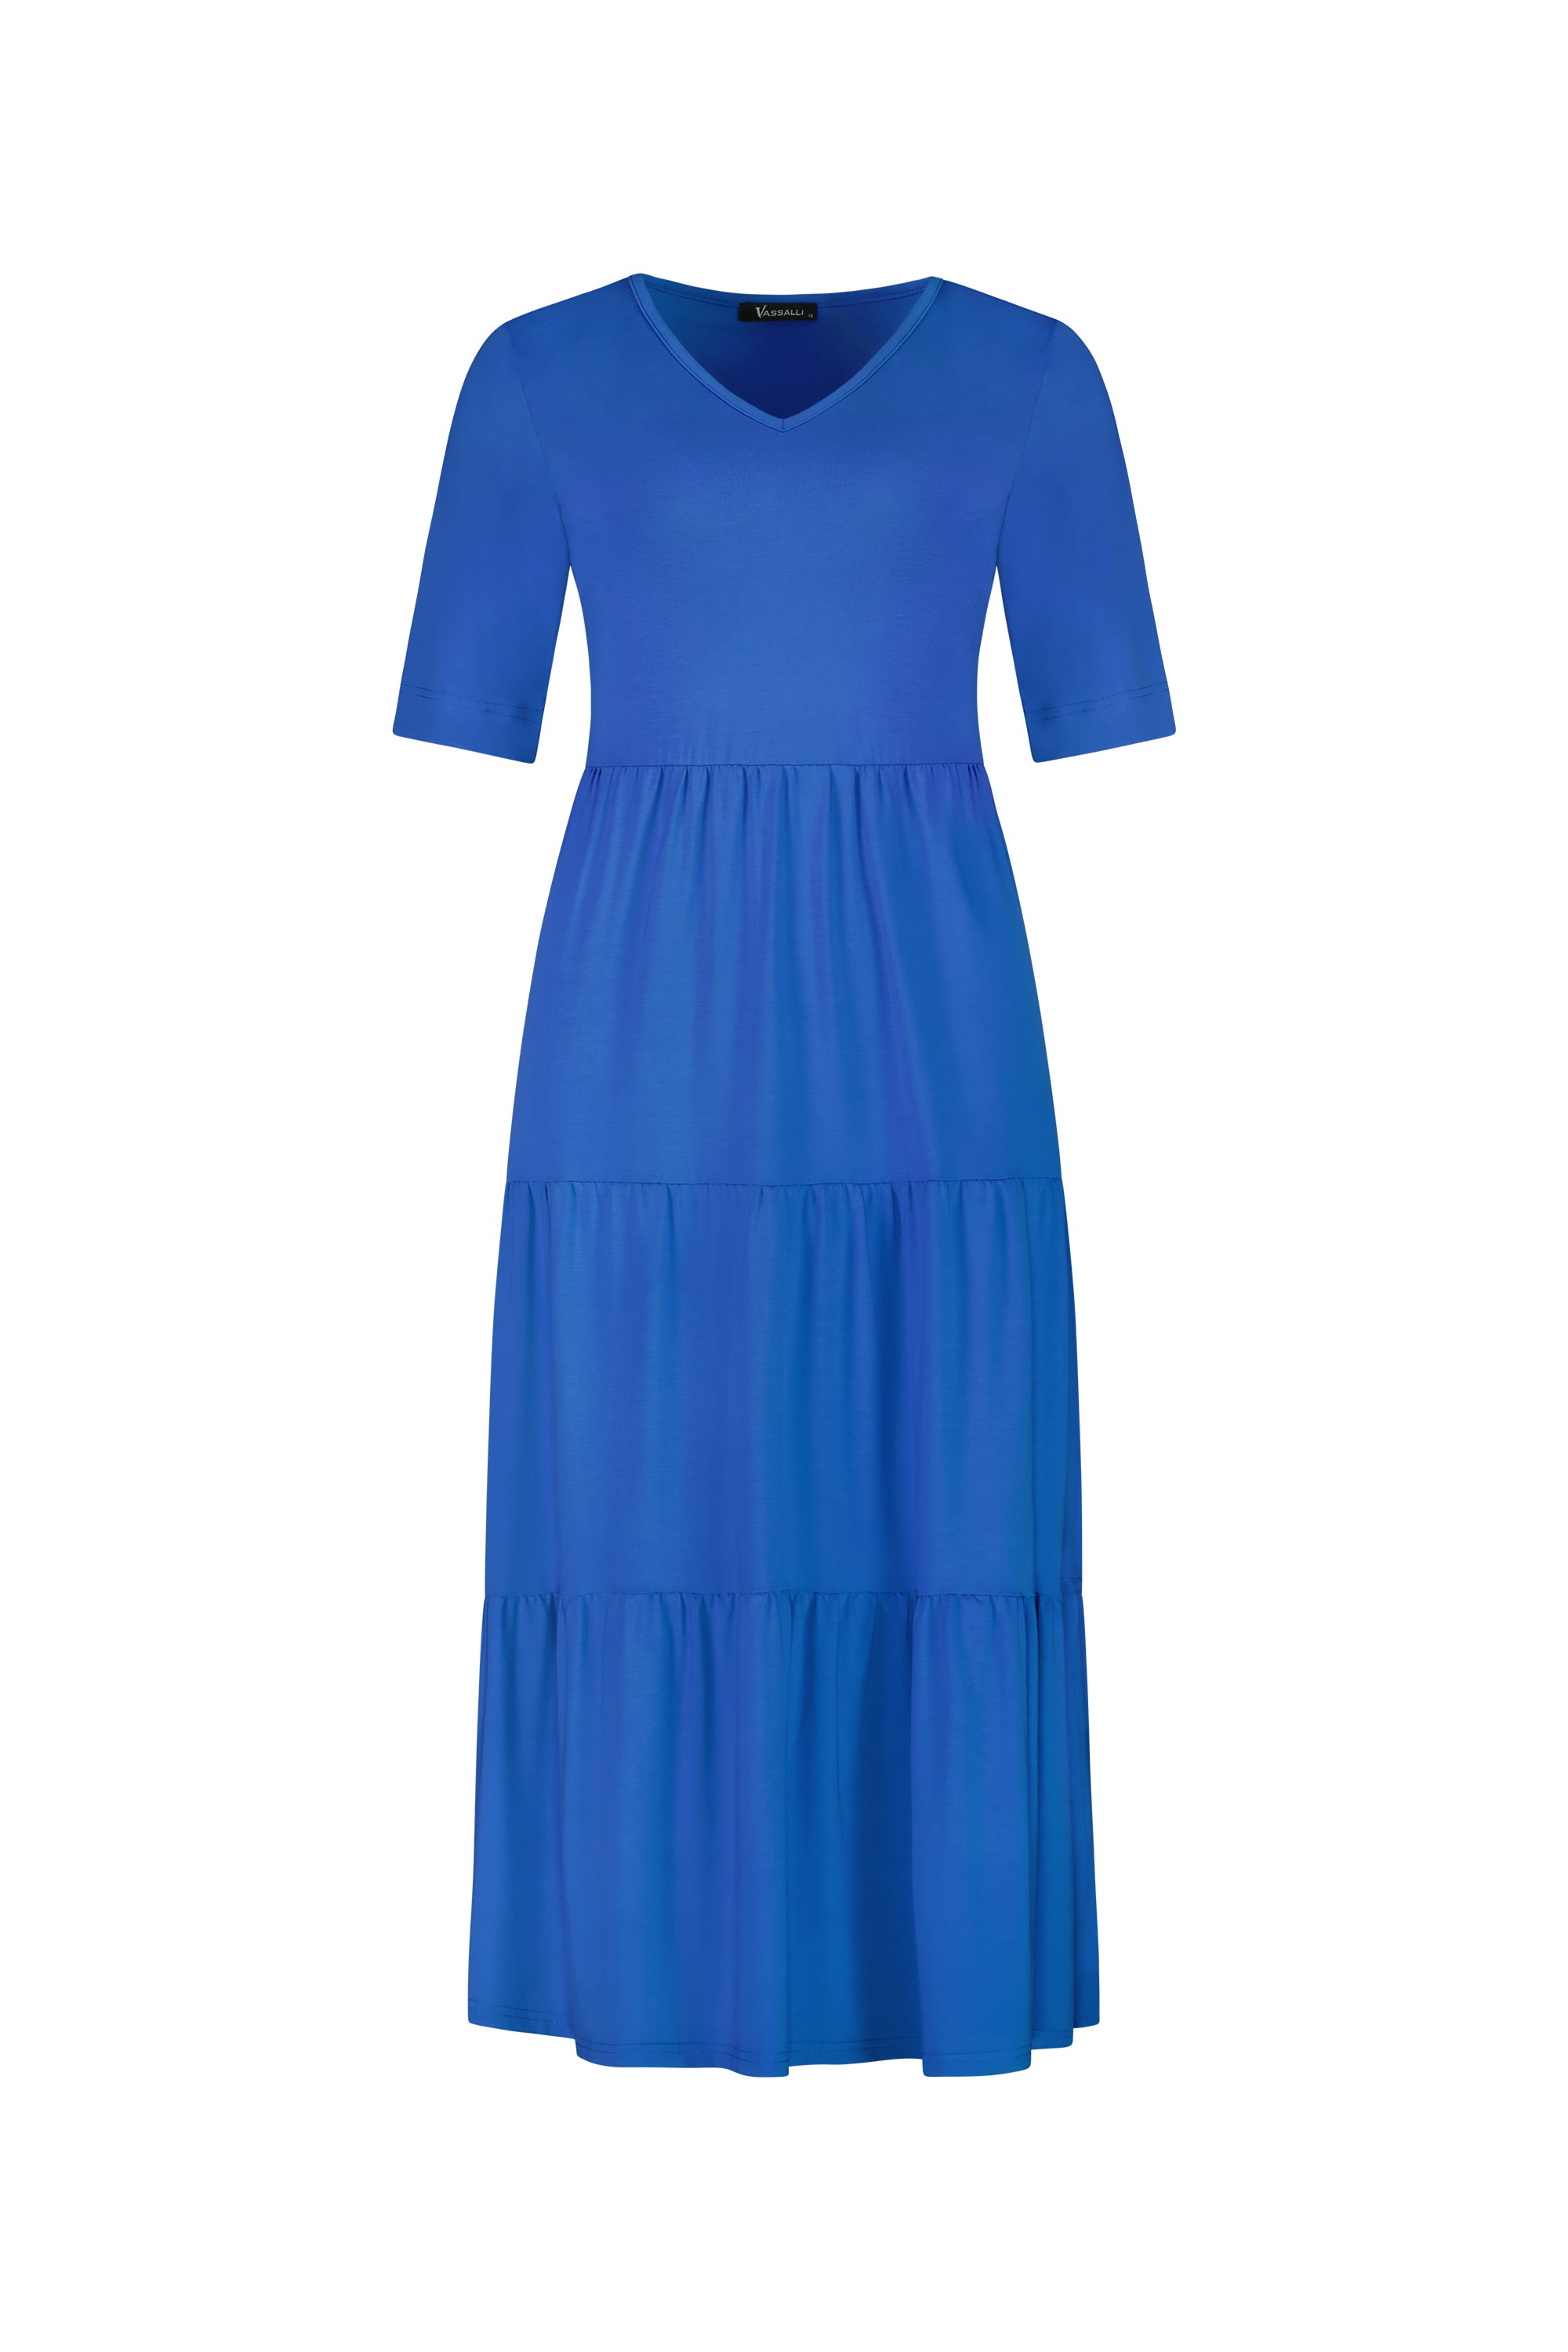 Vassalli V-Neck Short Sleeve Tiered Dress - Cobalt